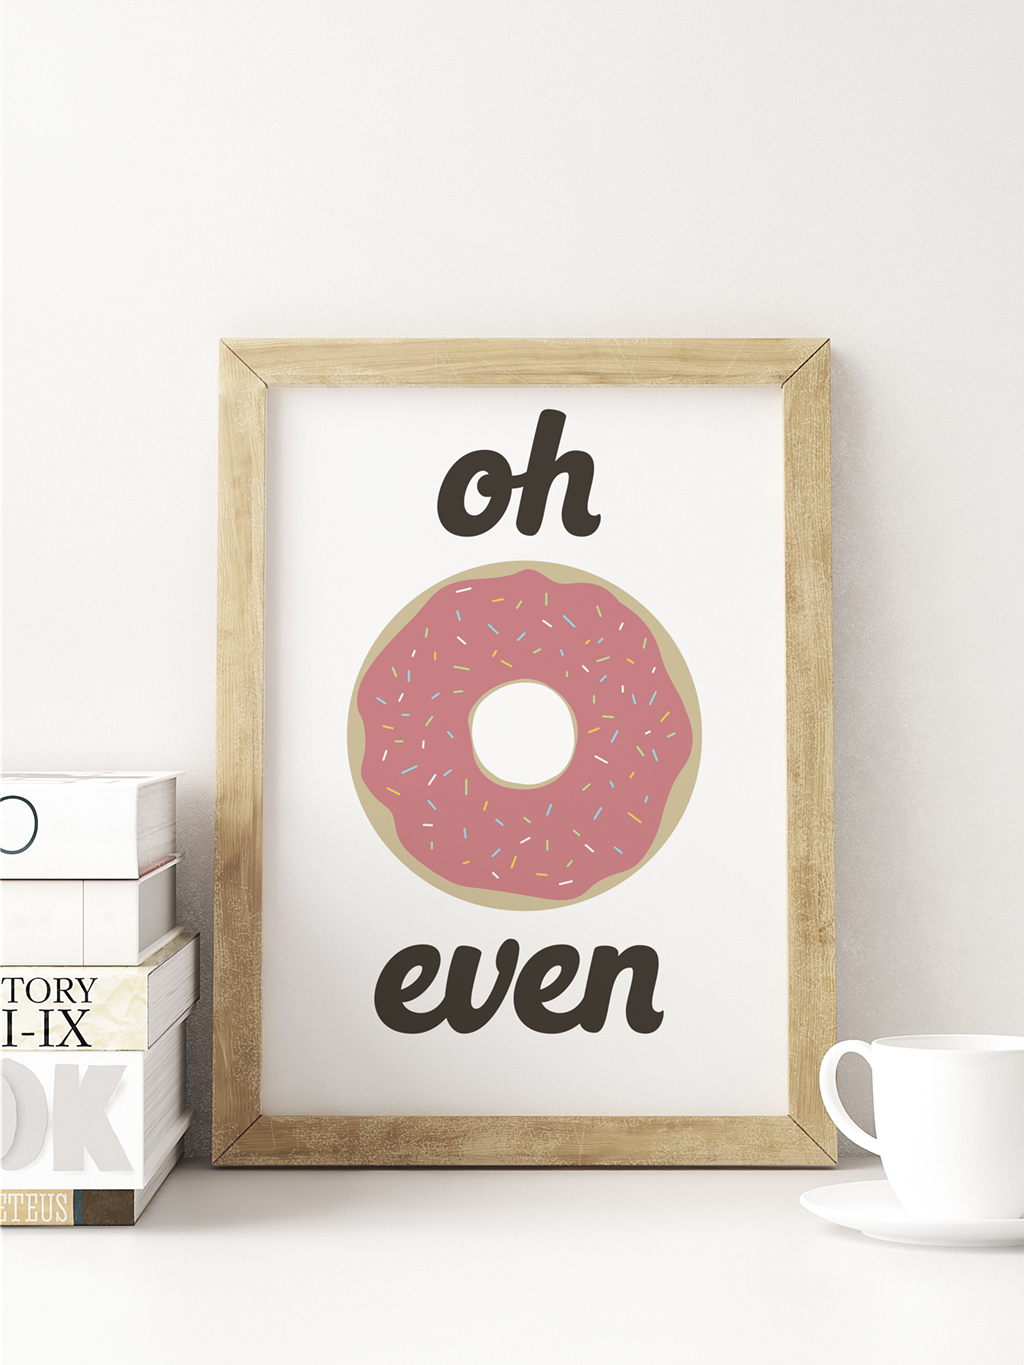 Oh Donut Even illustration